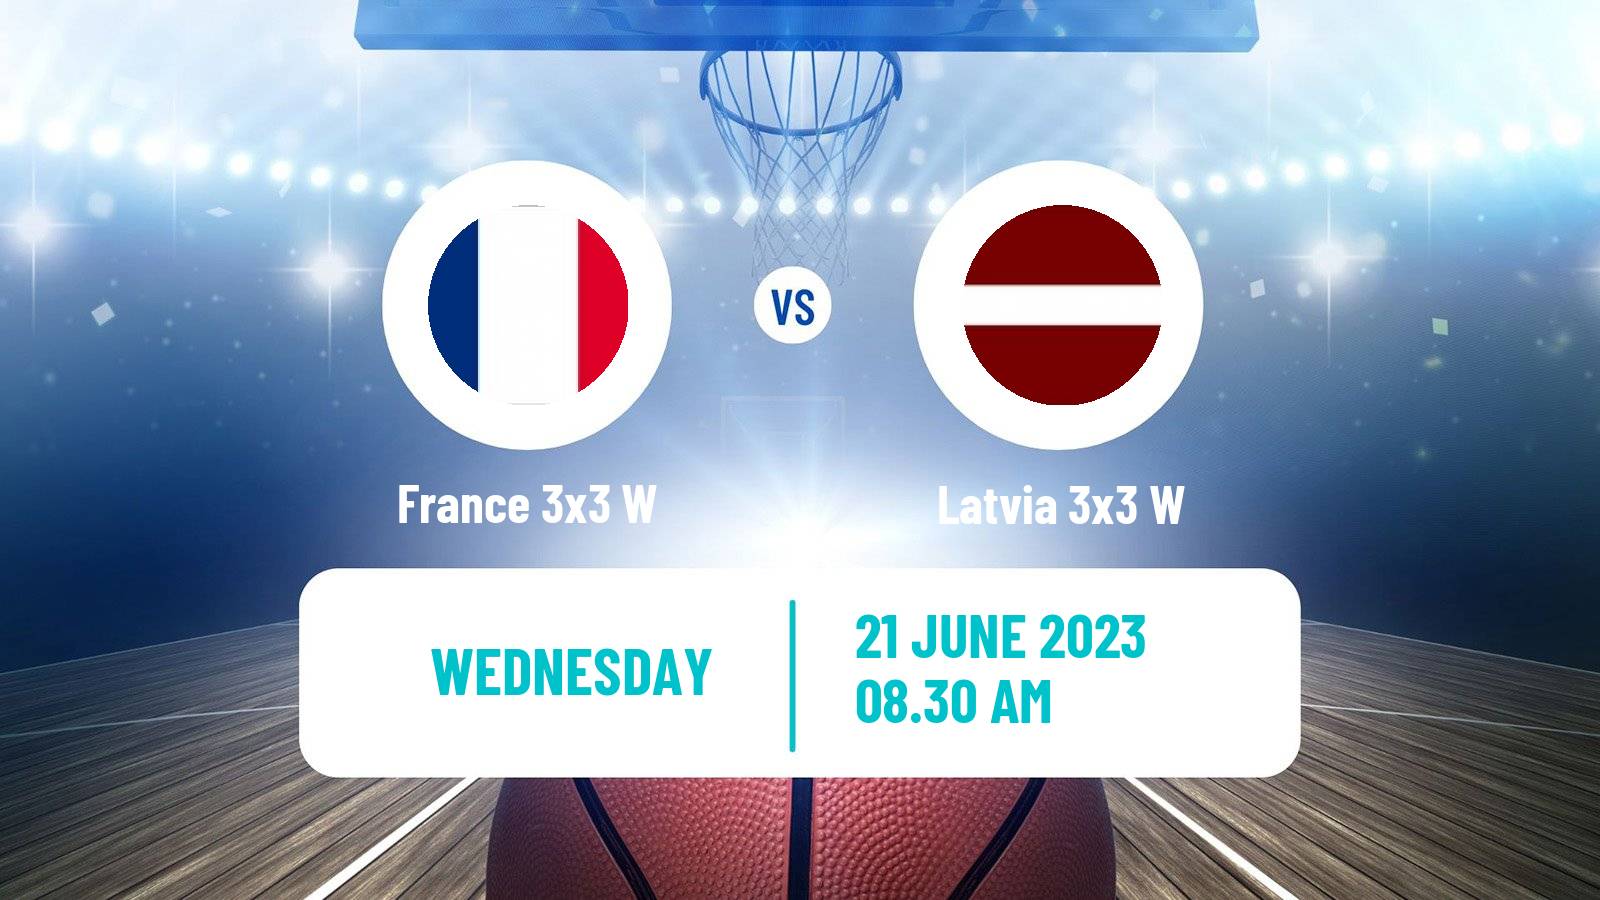 Basketball European Games 3x3 Women France 3x3 W - Latvia 3x3 W